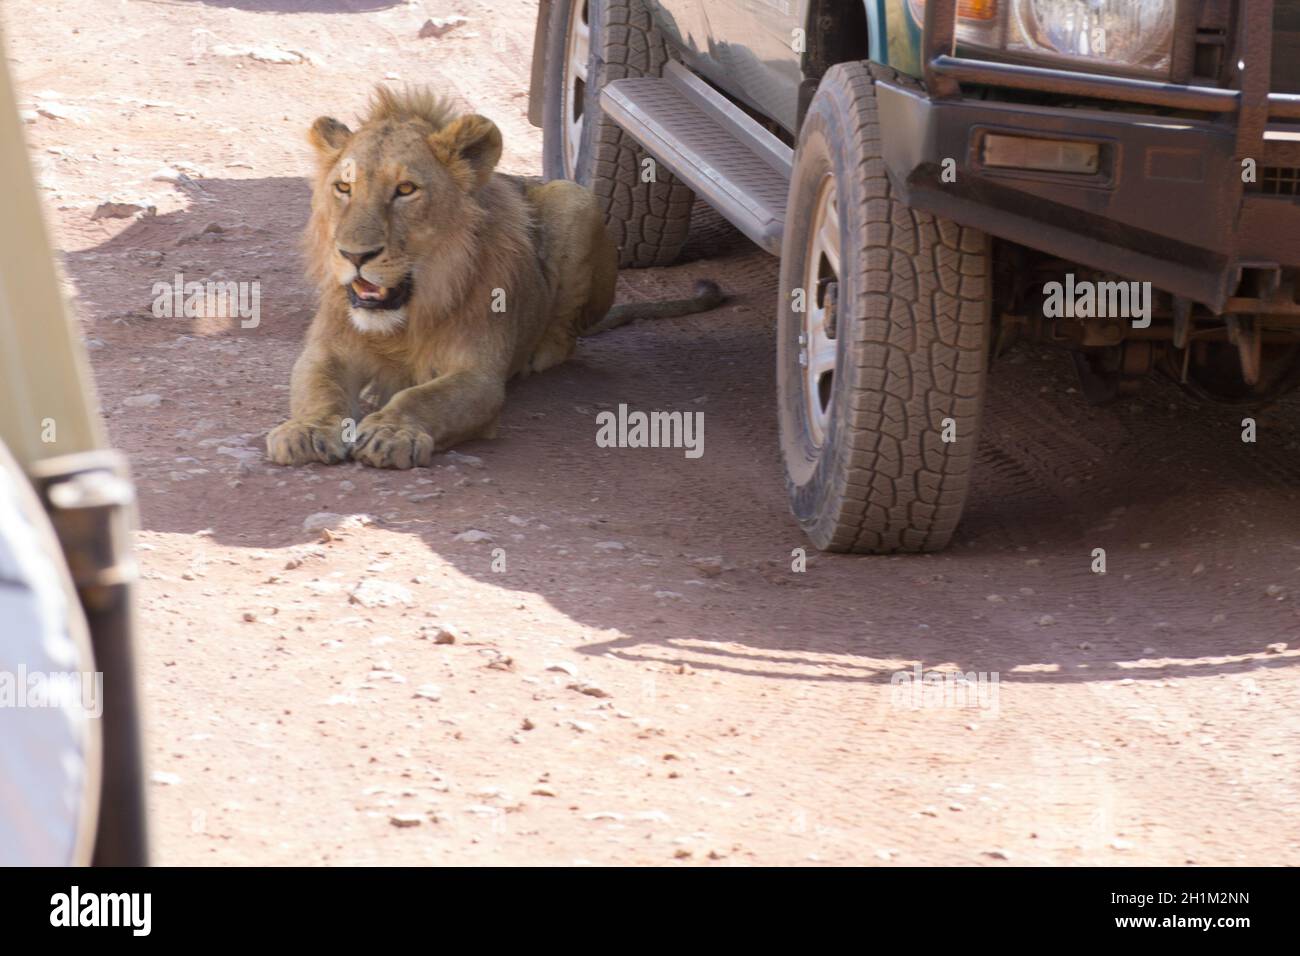 Lion near cars at Ngorongoro crater, Tanzania. African wildlife Stock Photo